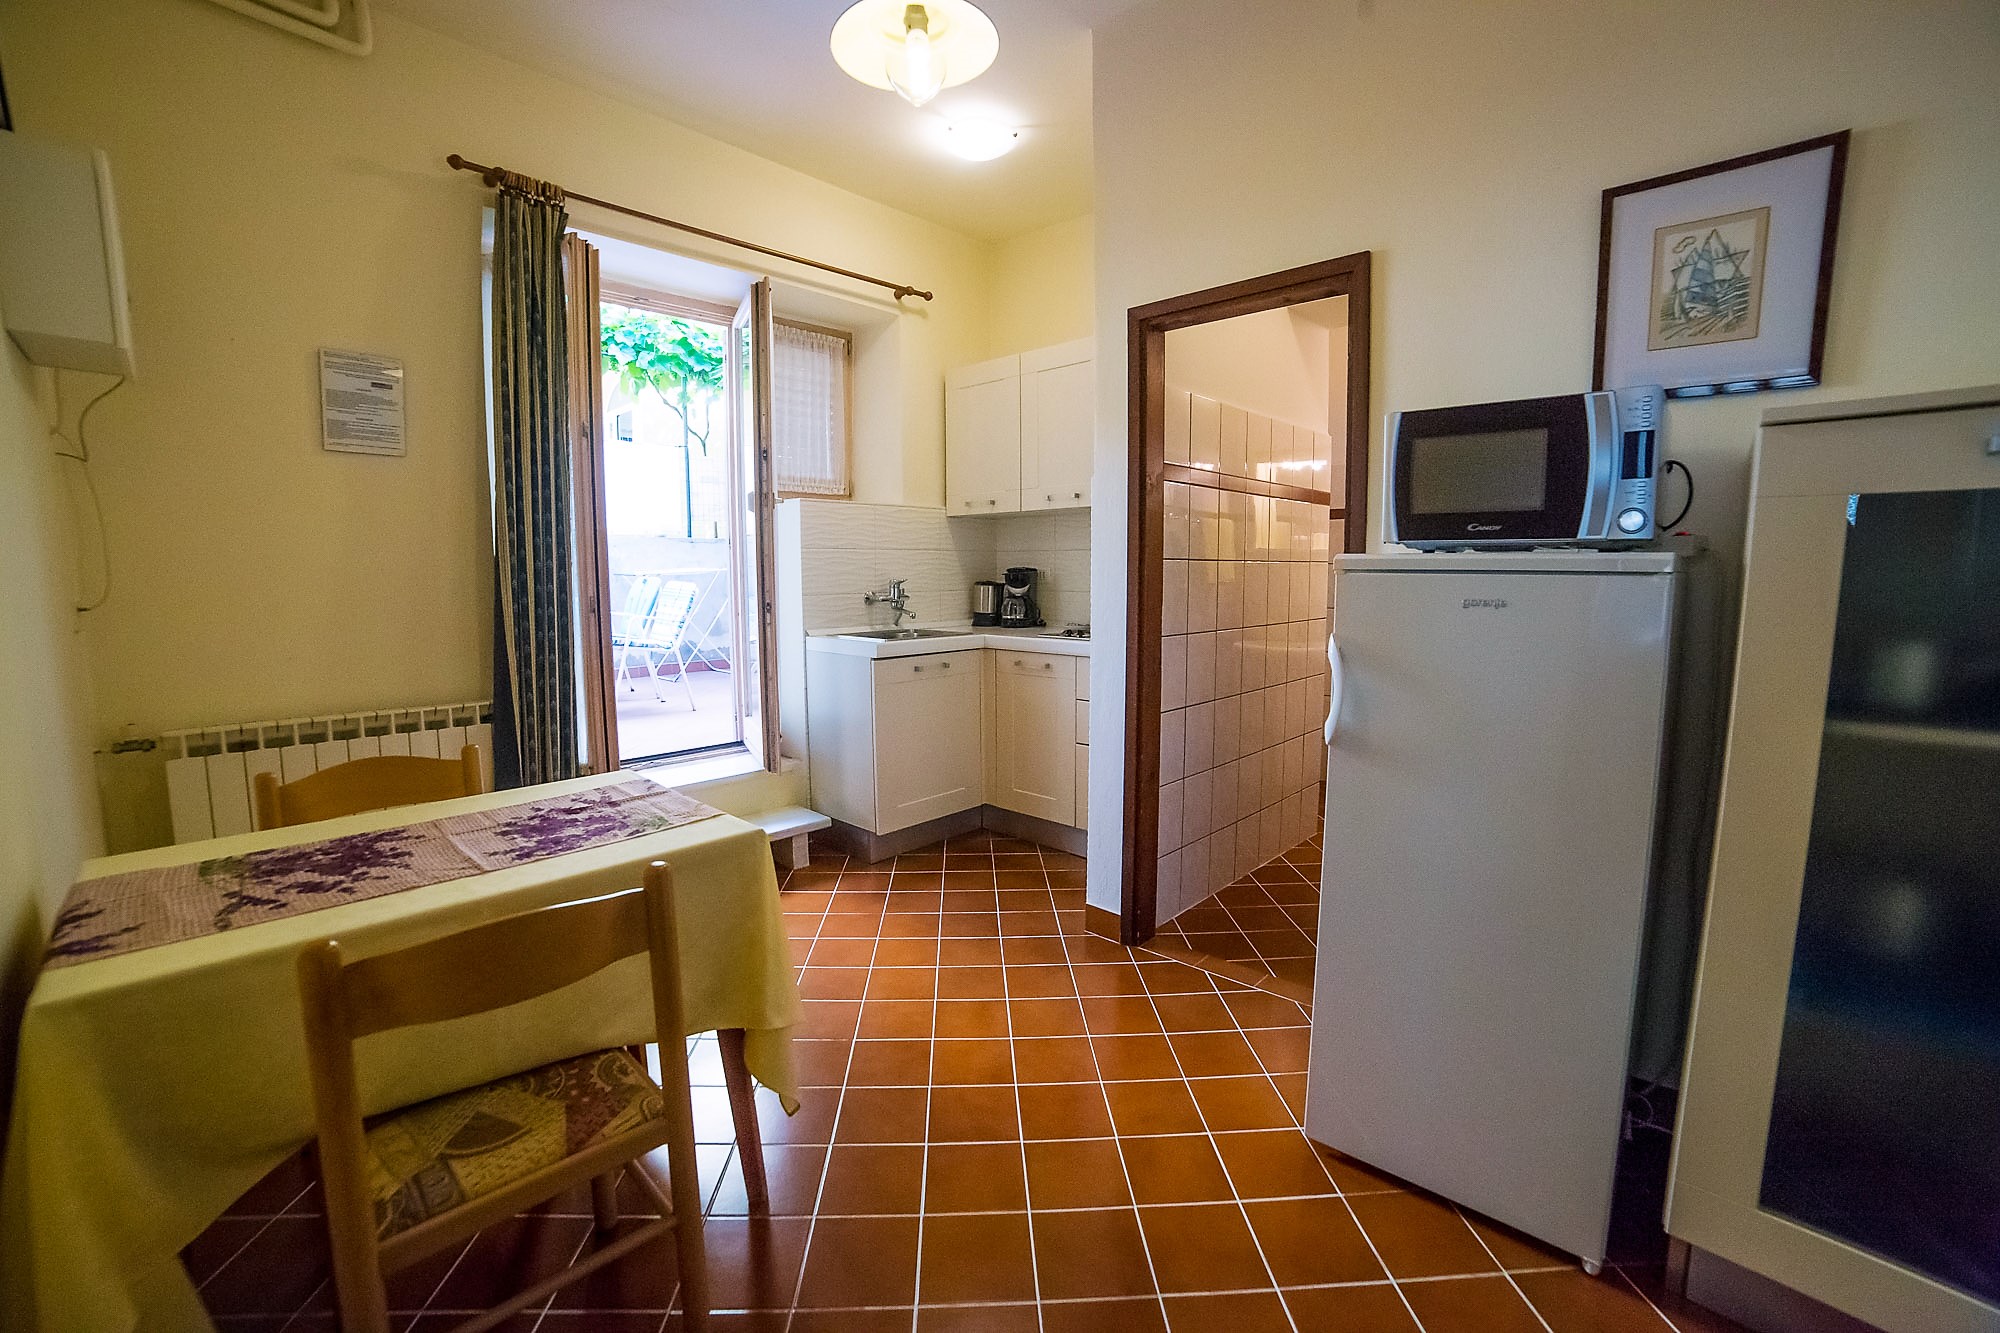 Apartman Nautico Villa Mihaela Porec dinning room (2) – kopija.jpg